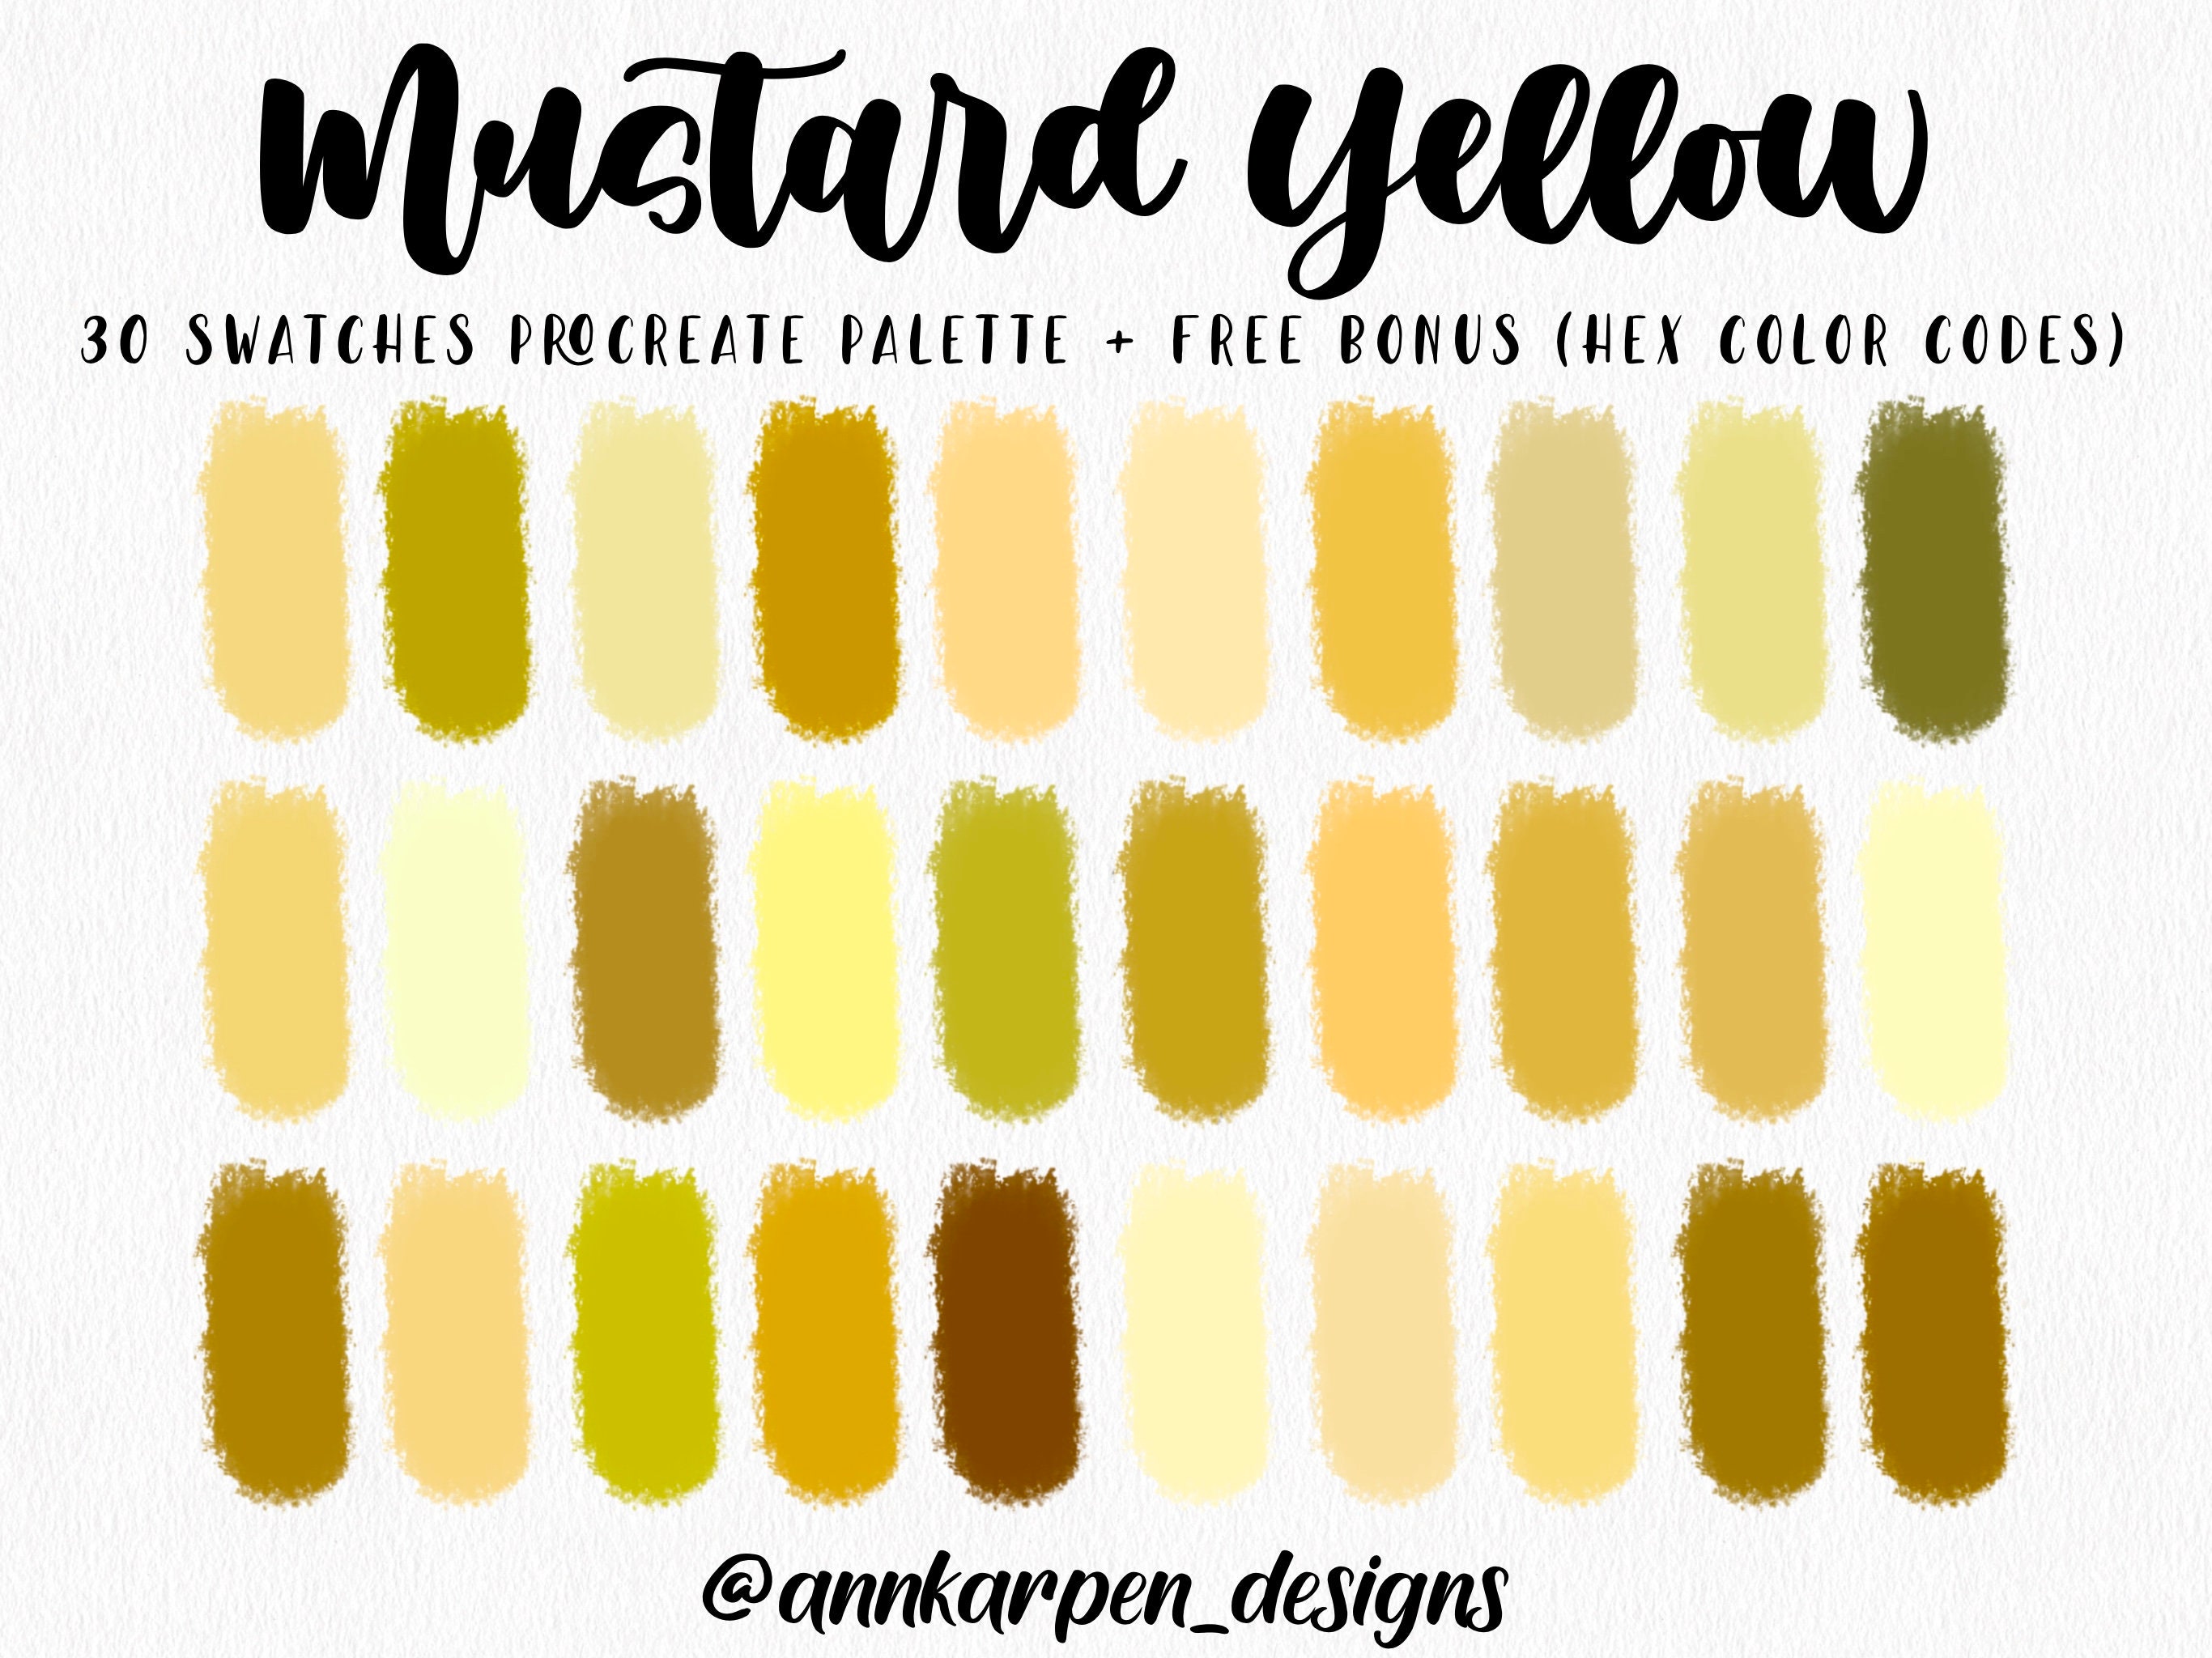 8. "Mustard Yellow" - wide 6